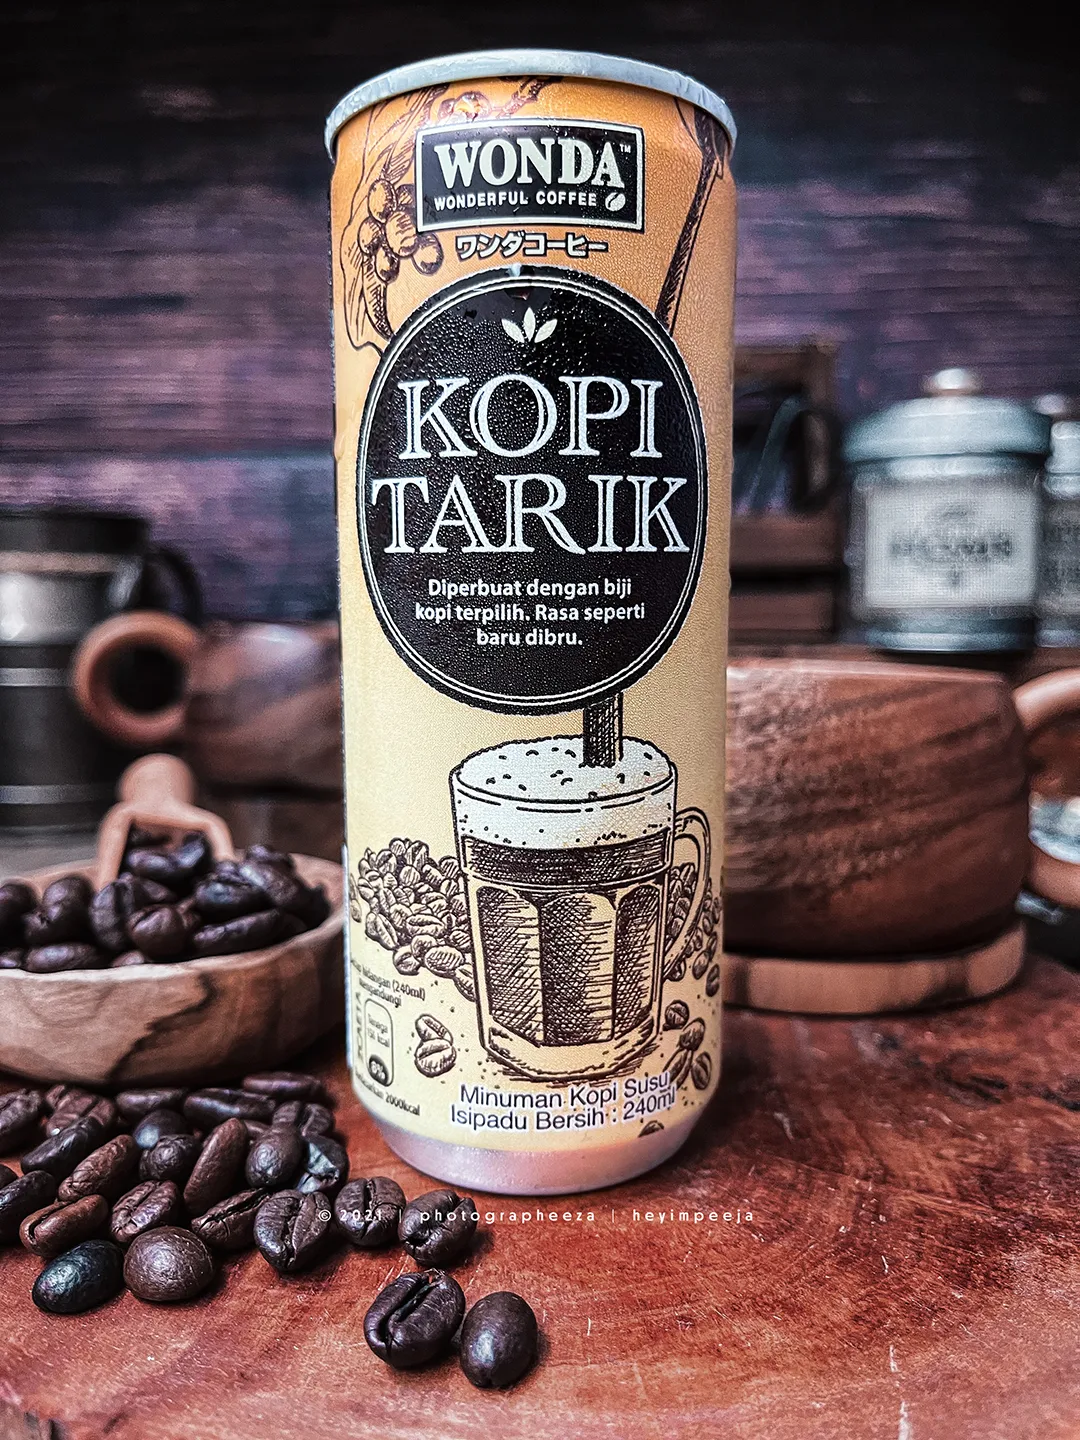 Kopi tarik wonda coffee